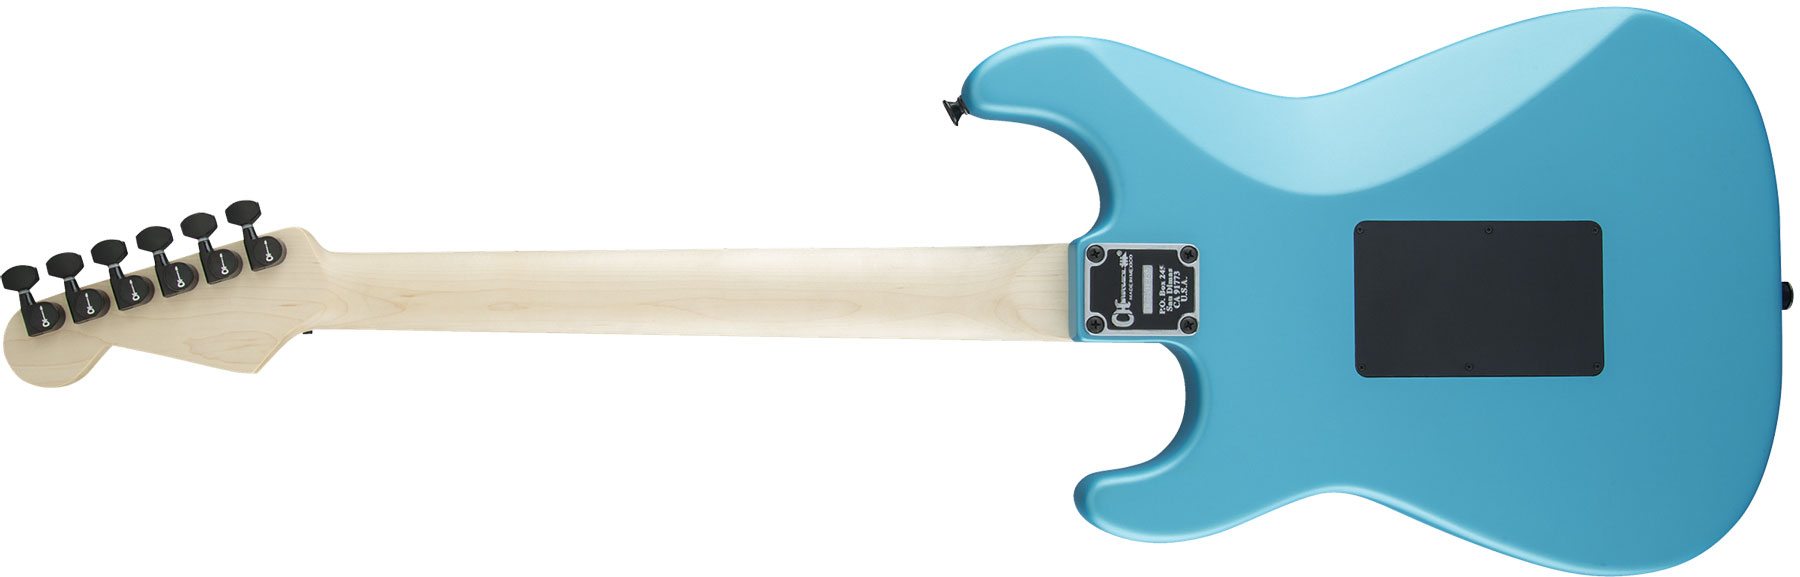 Charvel Pro-mod Style 1 So-cal Hh Seymour Duncan Fr Mn - Matte Blue Frost - Elektrische gitaar in Str-vorm - Variation 1